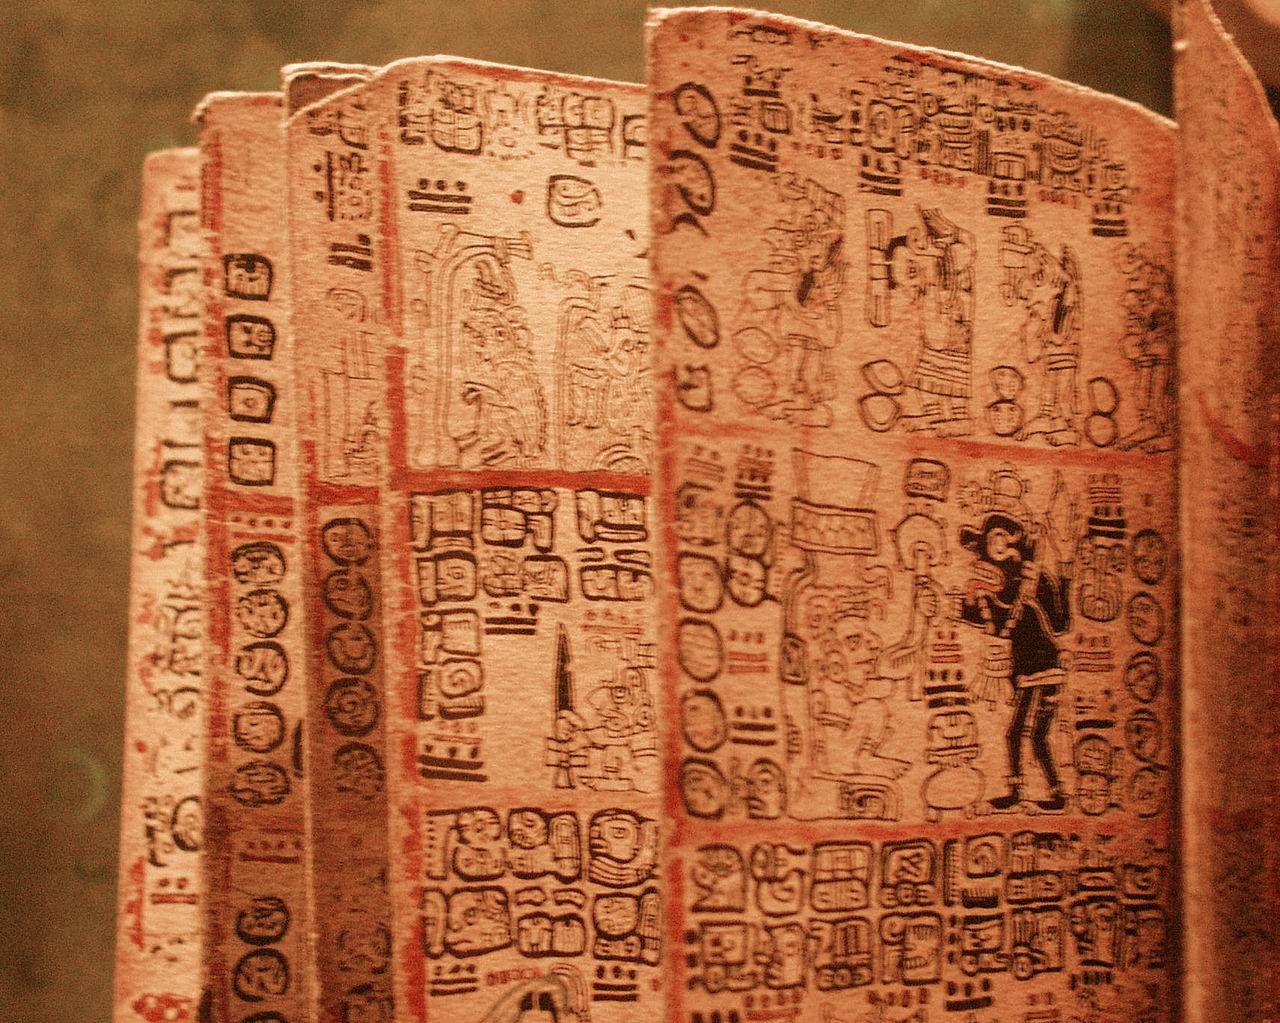 aztec maya indian font